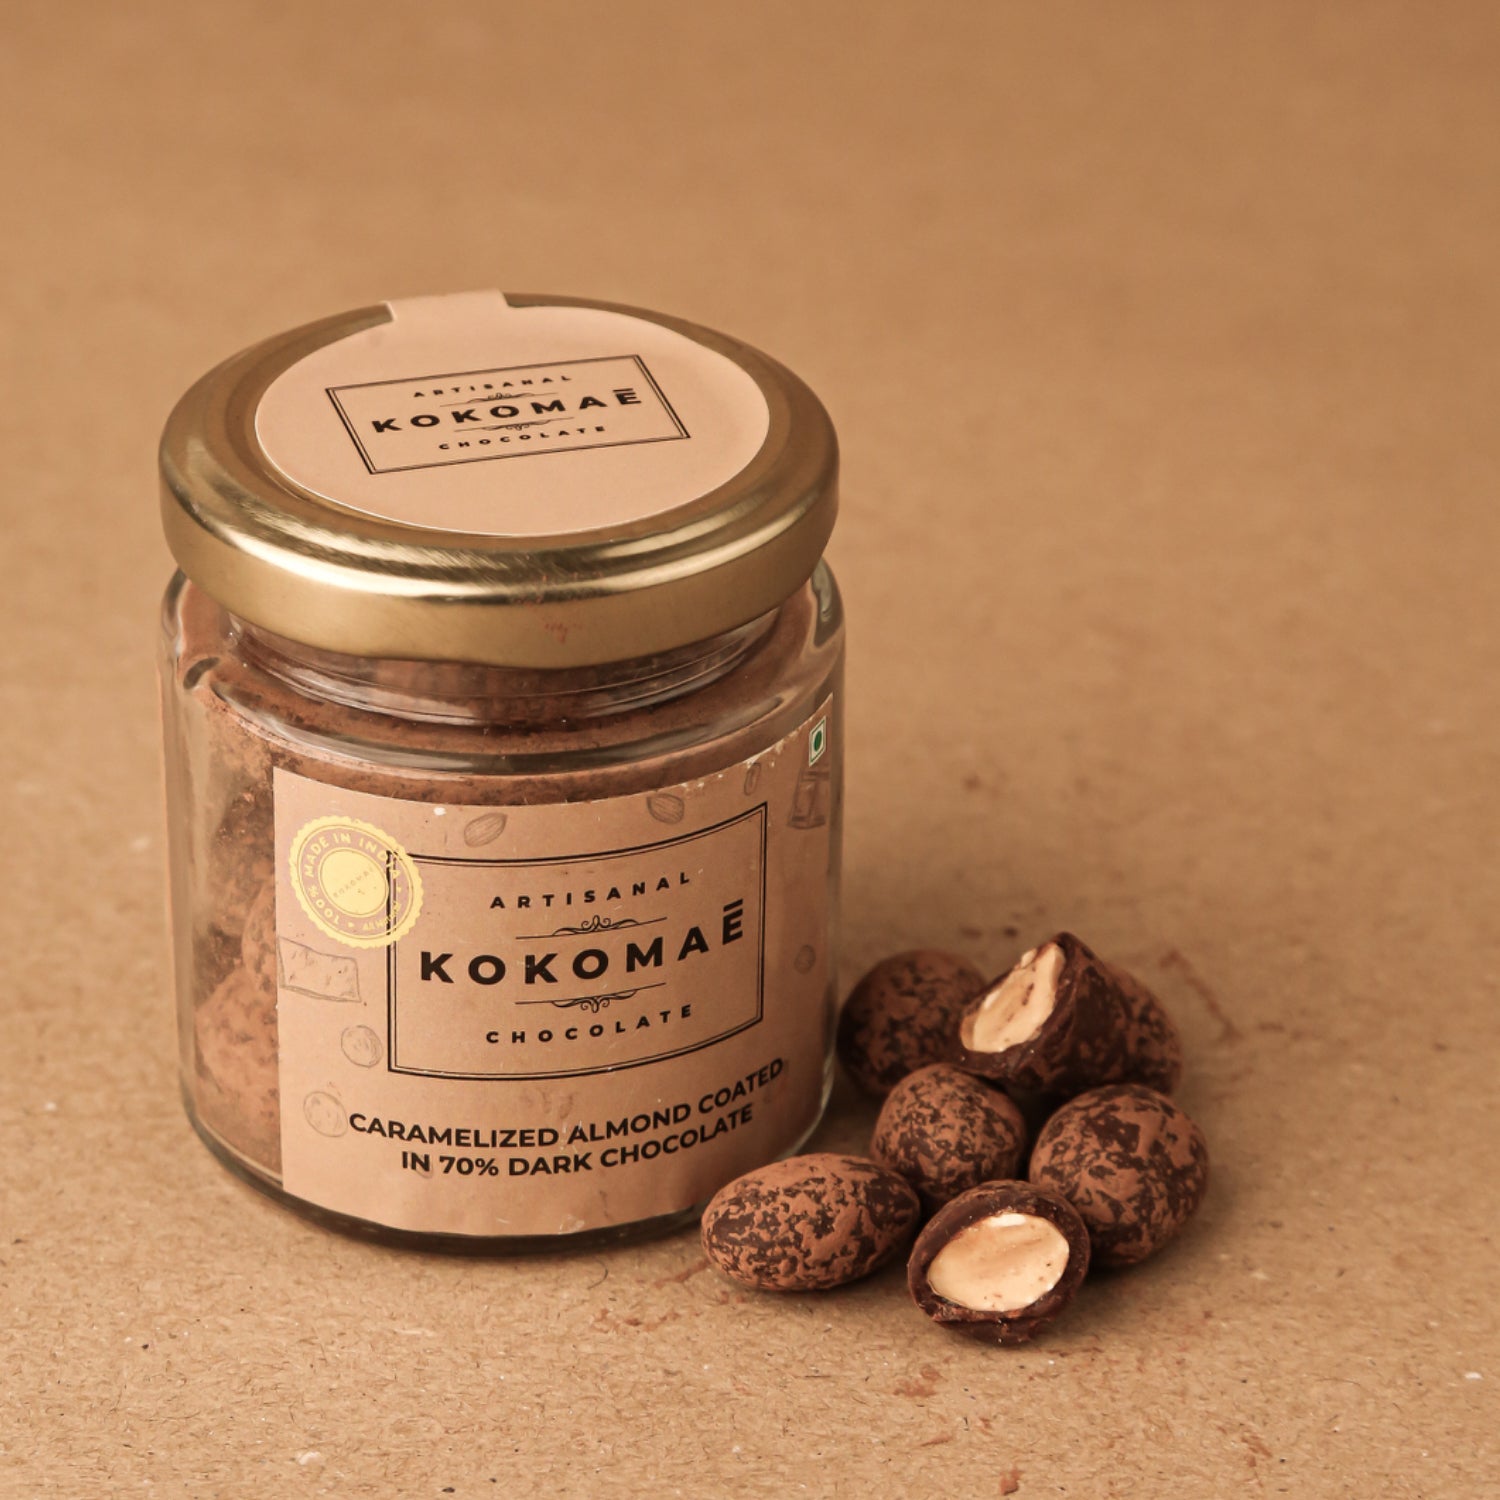 Kokomaē Caramelized Almonds Coated in 70% Dark Chocolate